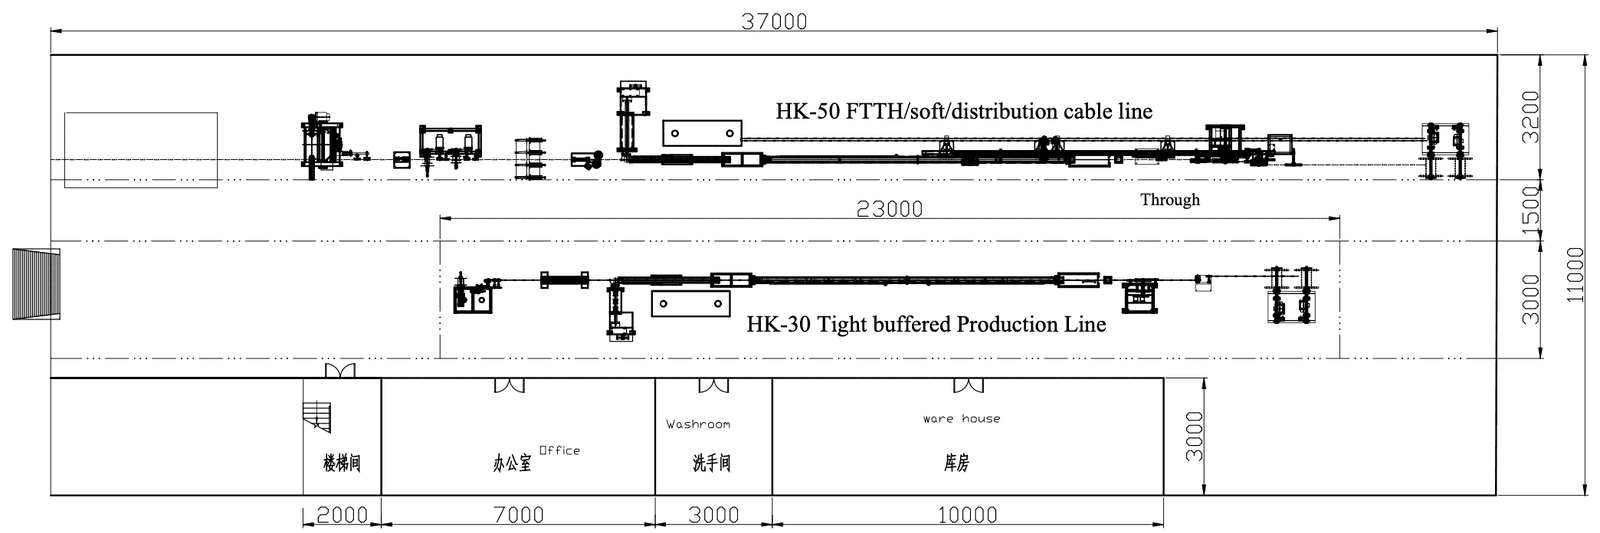 hk 35+50 line's layout